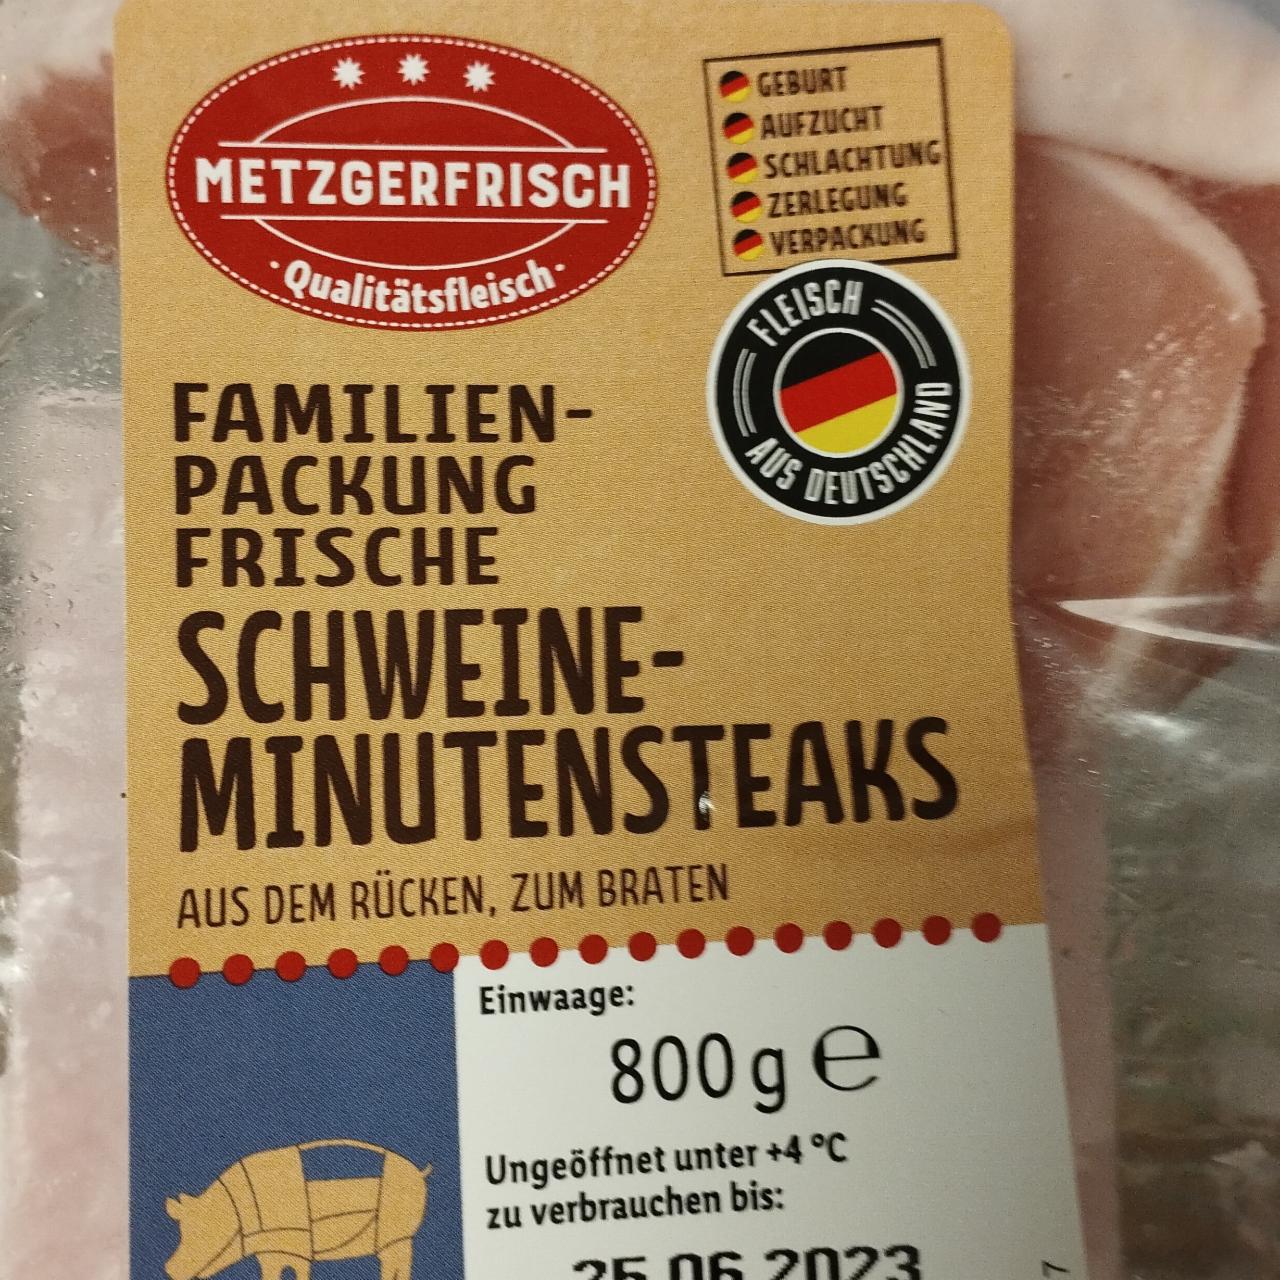 Familien-packung frische ⋙TablycjaKalorijnosti schweine цінність minutensteaks харчова Metzgerfrisch - калорійність,